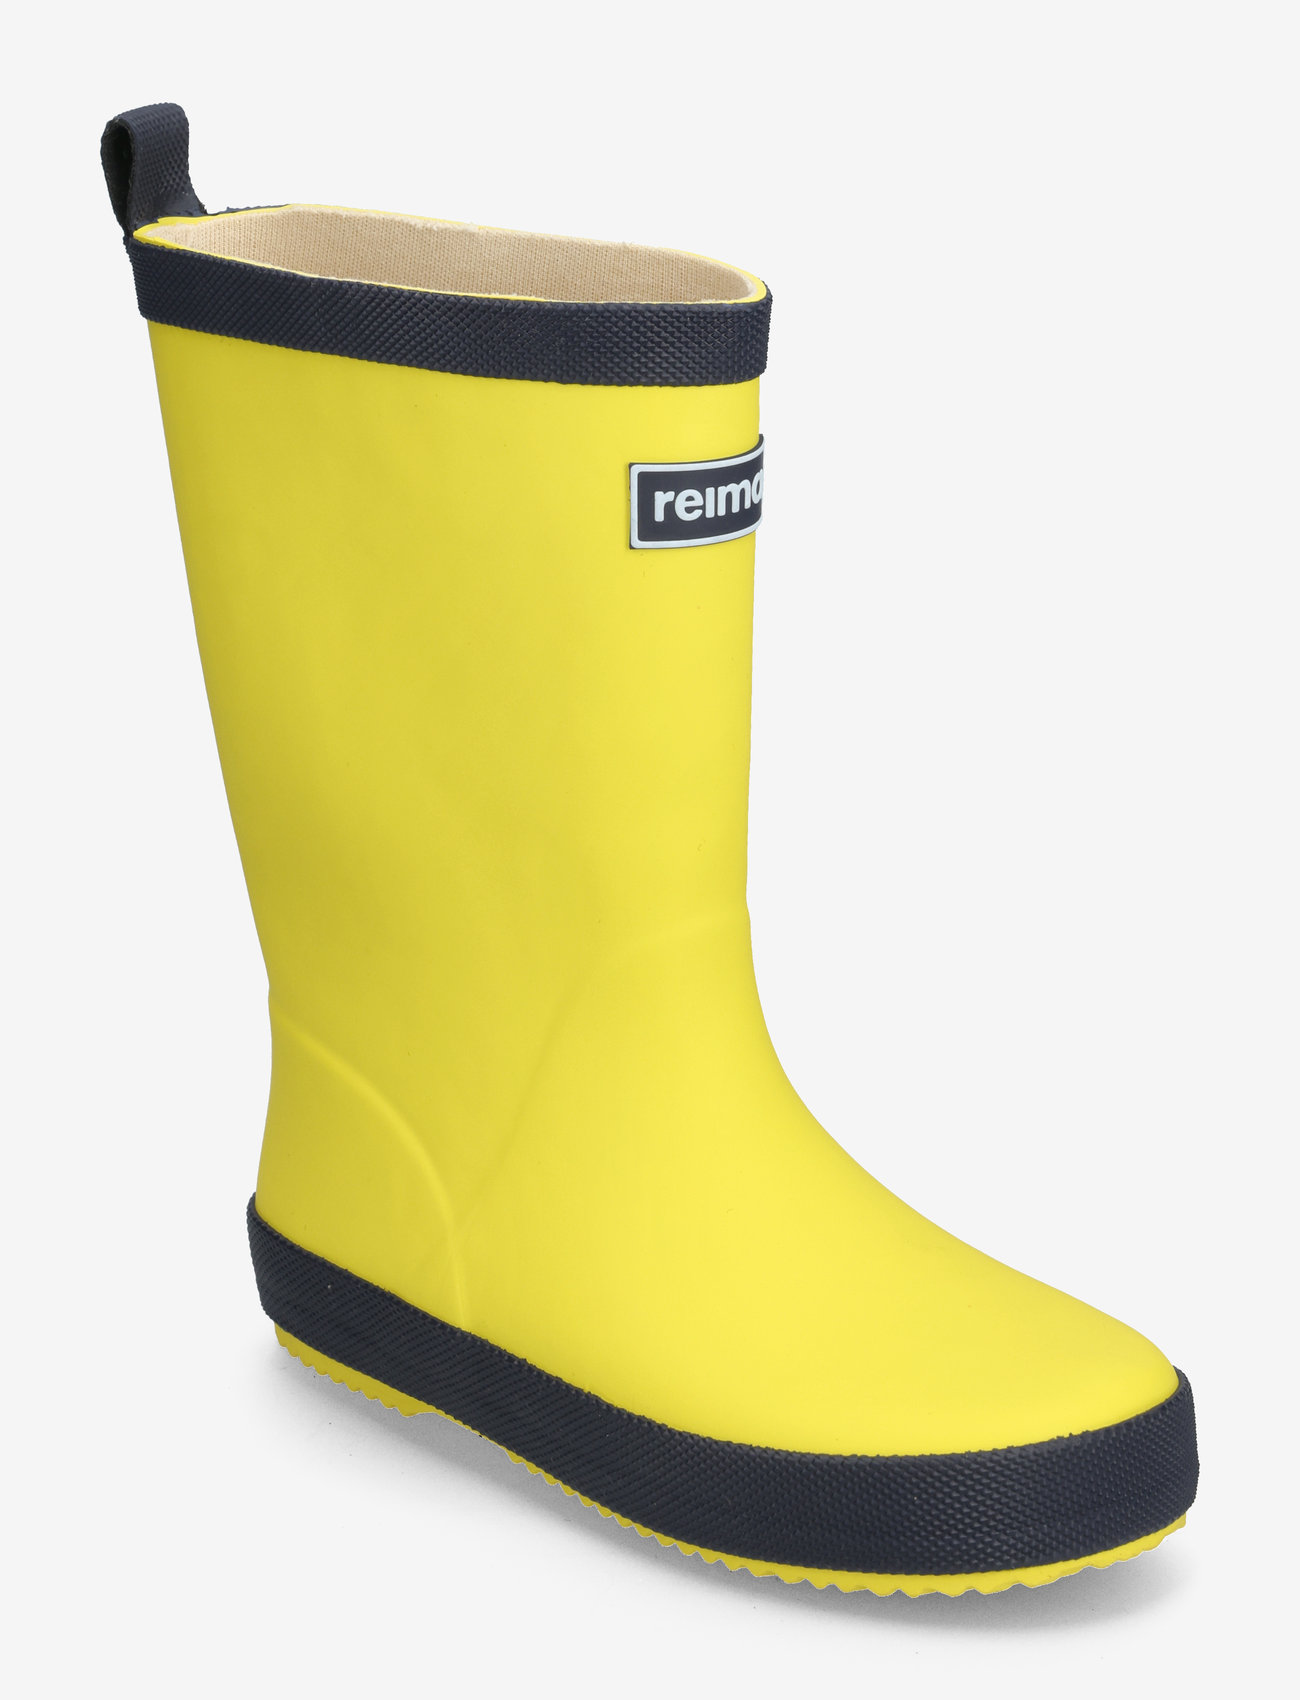 Reima - Rain boots, Taikuus - gummistøvler uden for - yellow - 1